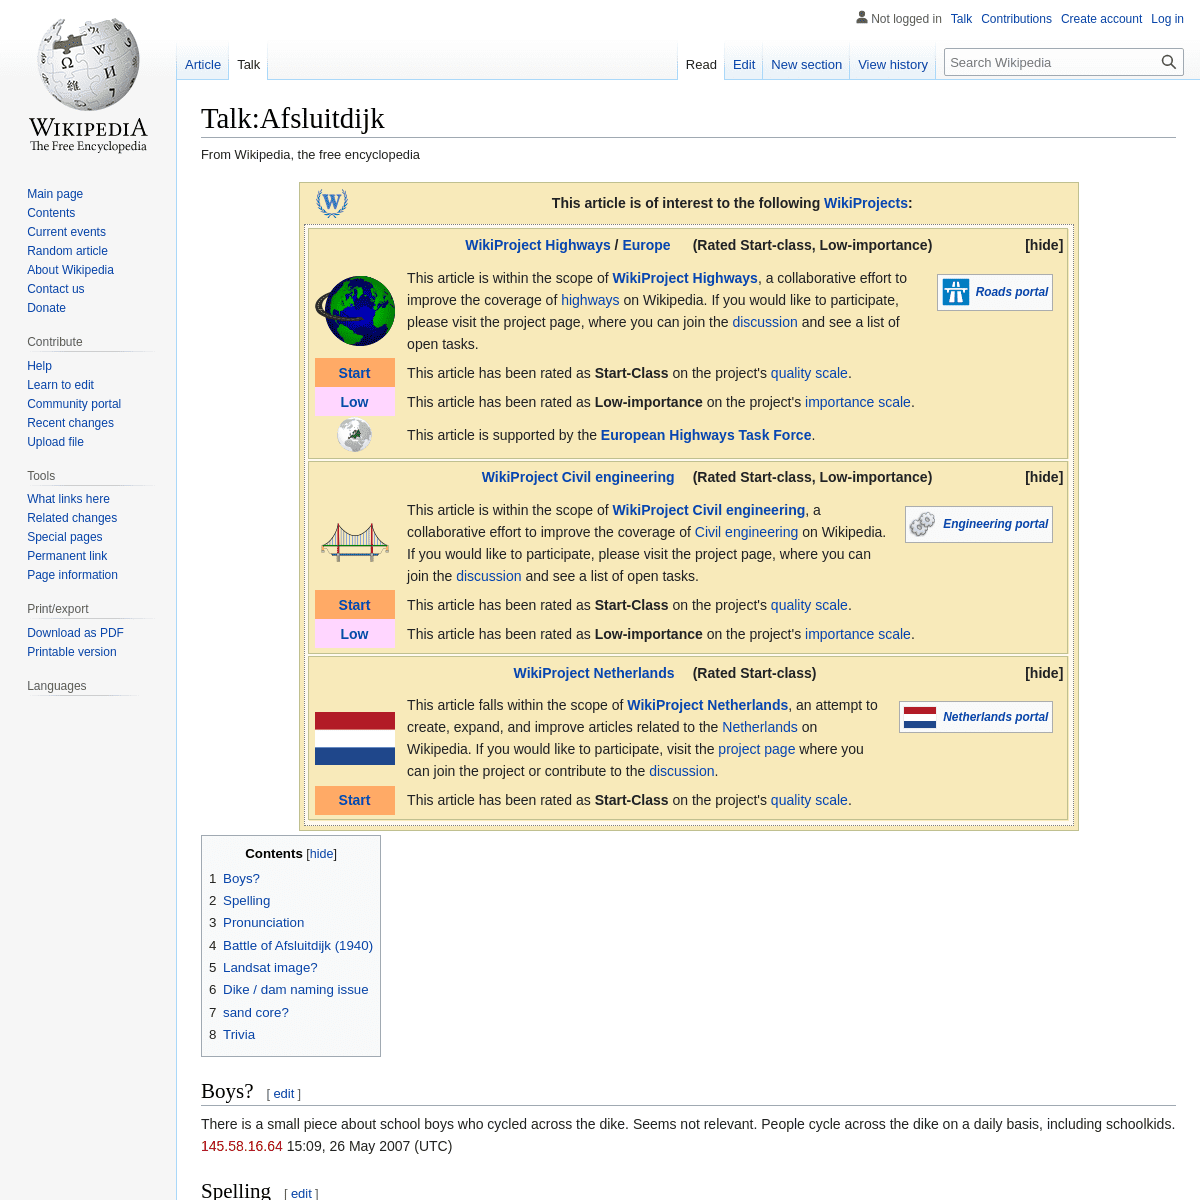 A complete backup of https://en.wikipedia.org/wiki/Talk:Afsluitdijk